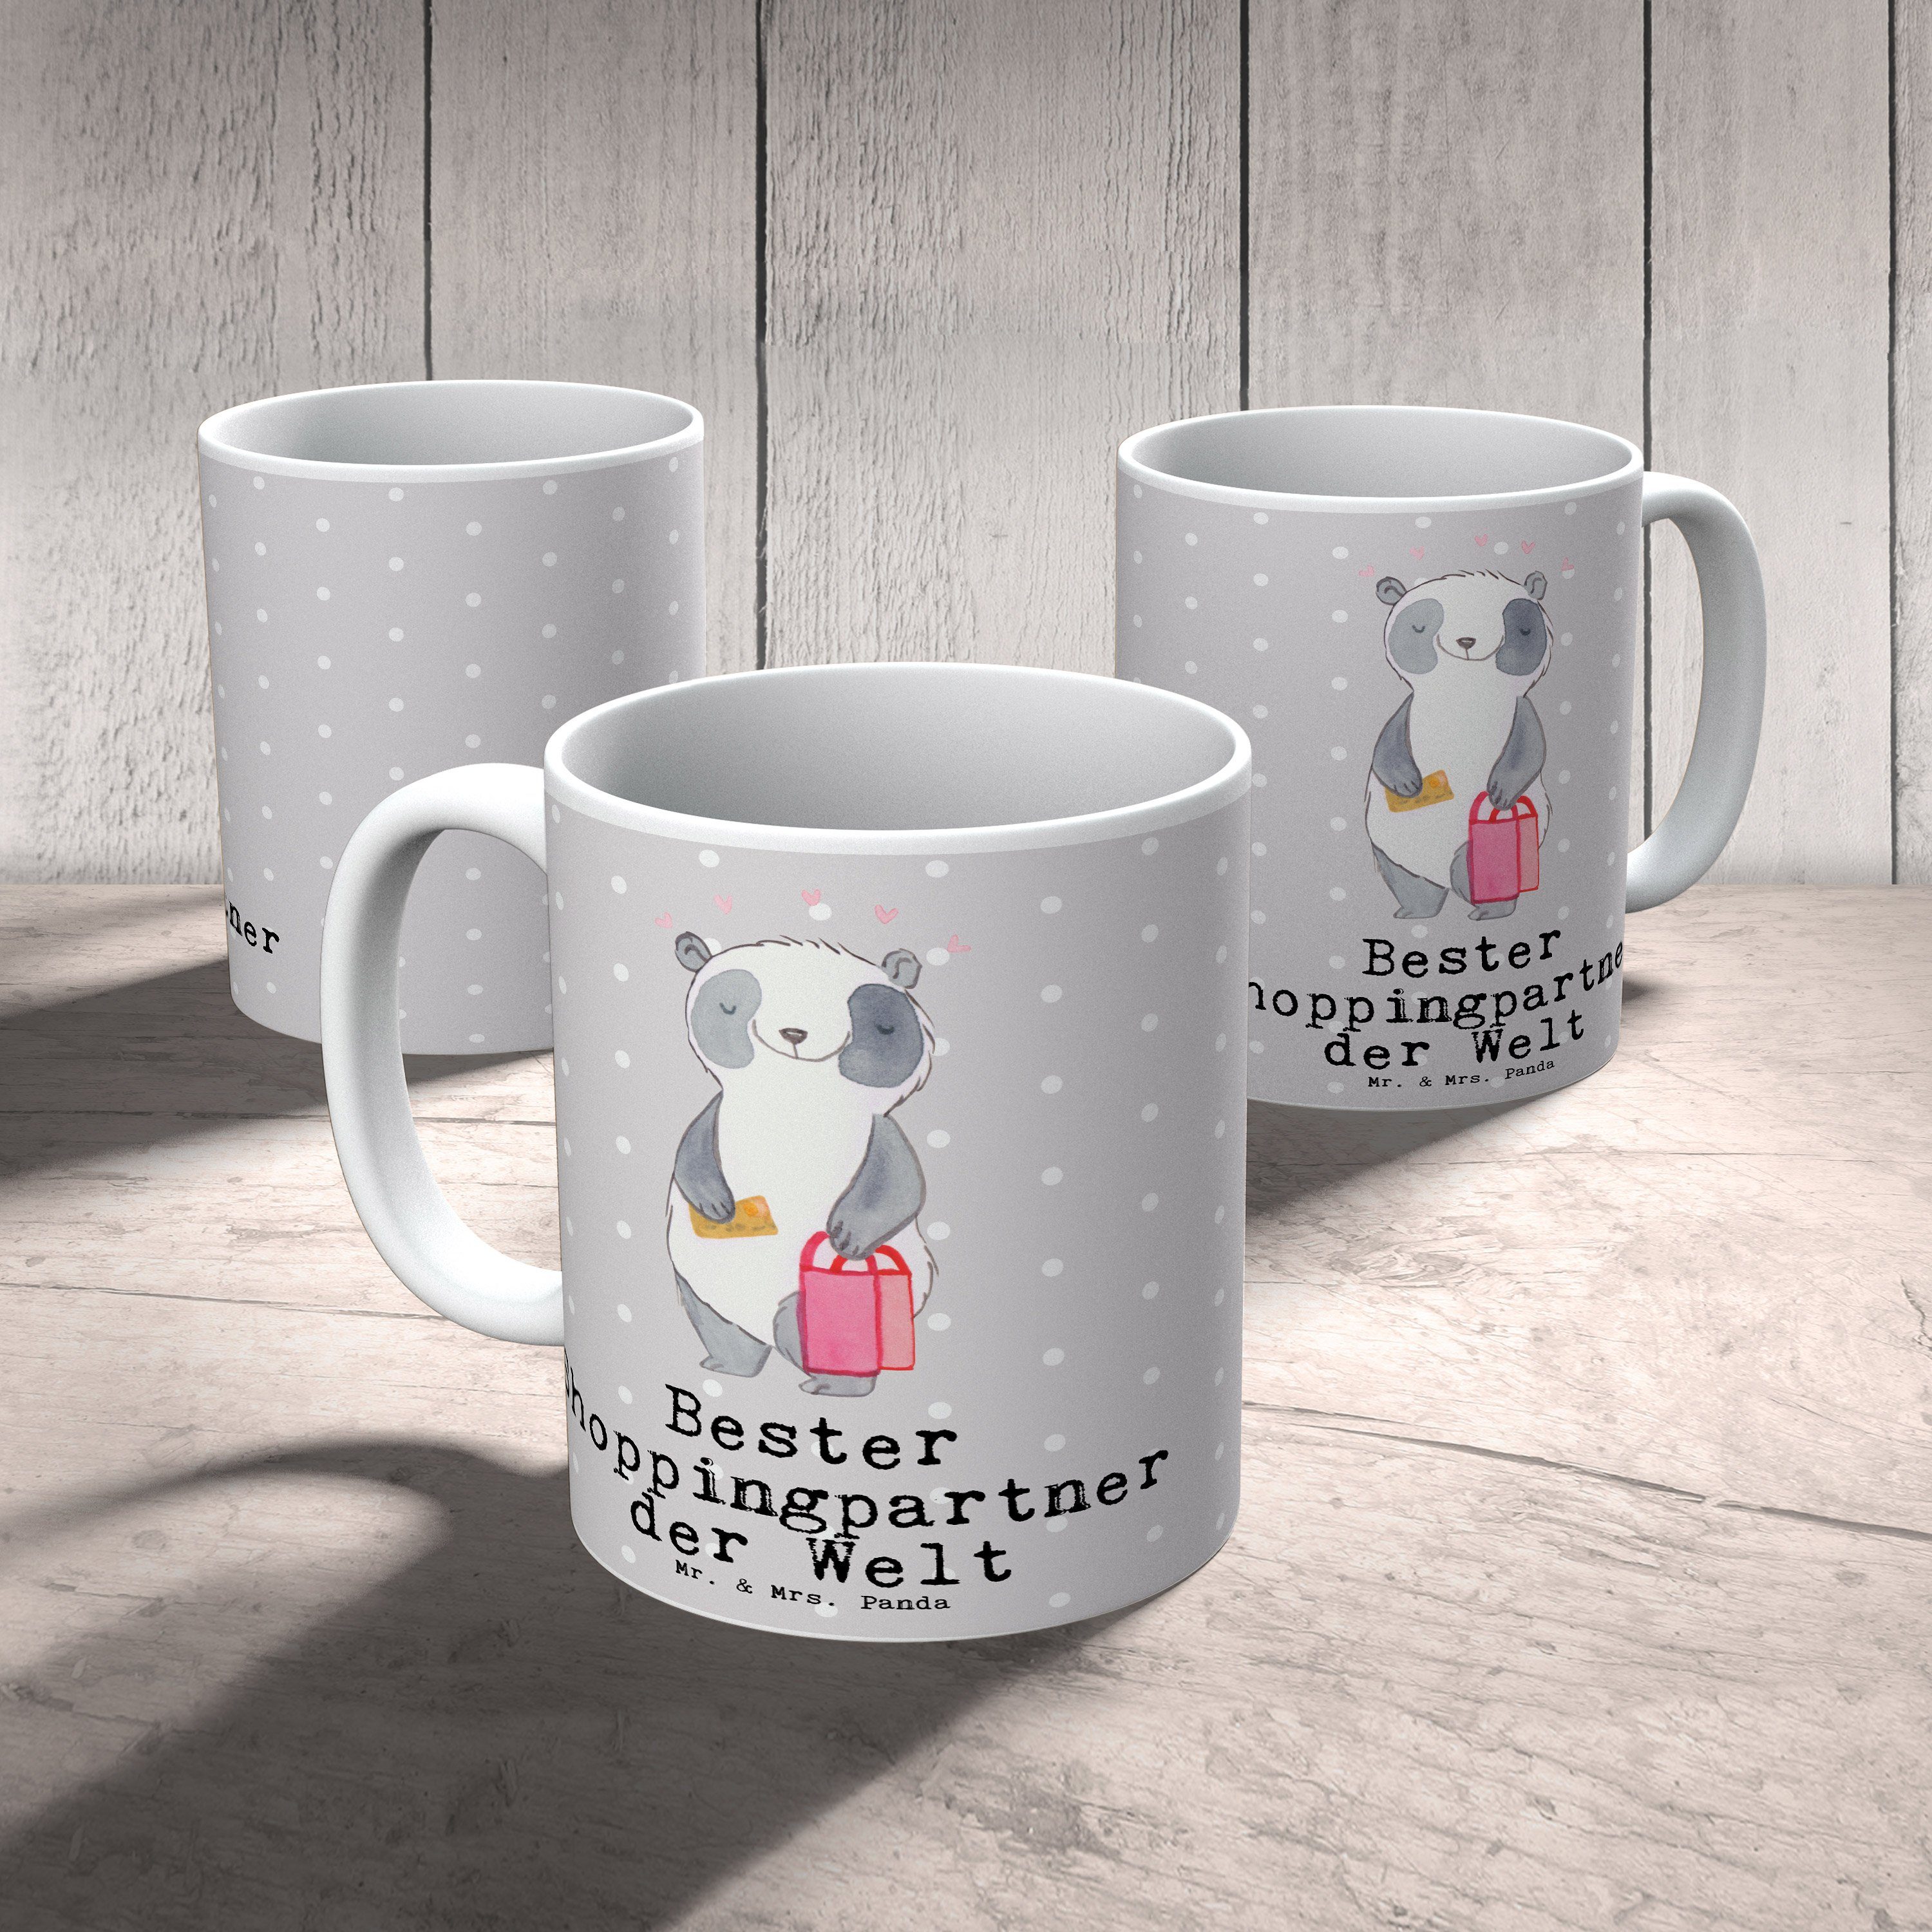 Tasse Pastell Panda - Mitb, - Mr. Welt Bester Grau Geschenk, & der Keramik Panda Shoppingpartner Mrs.